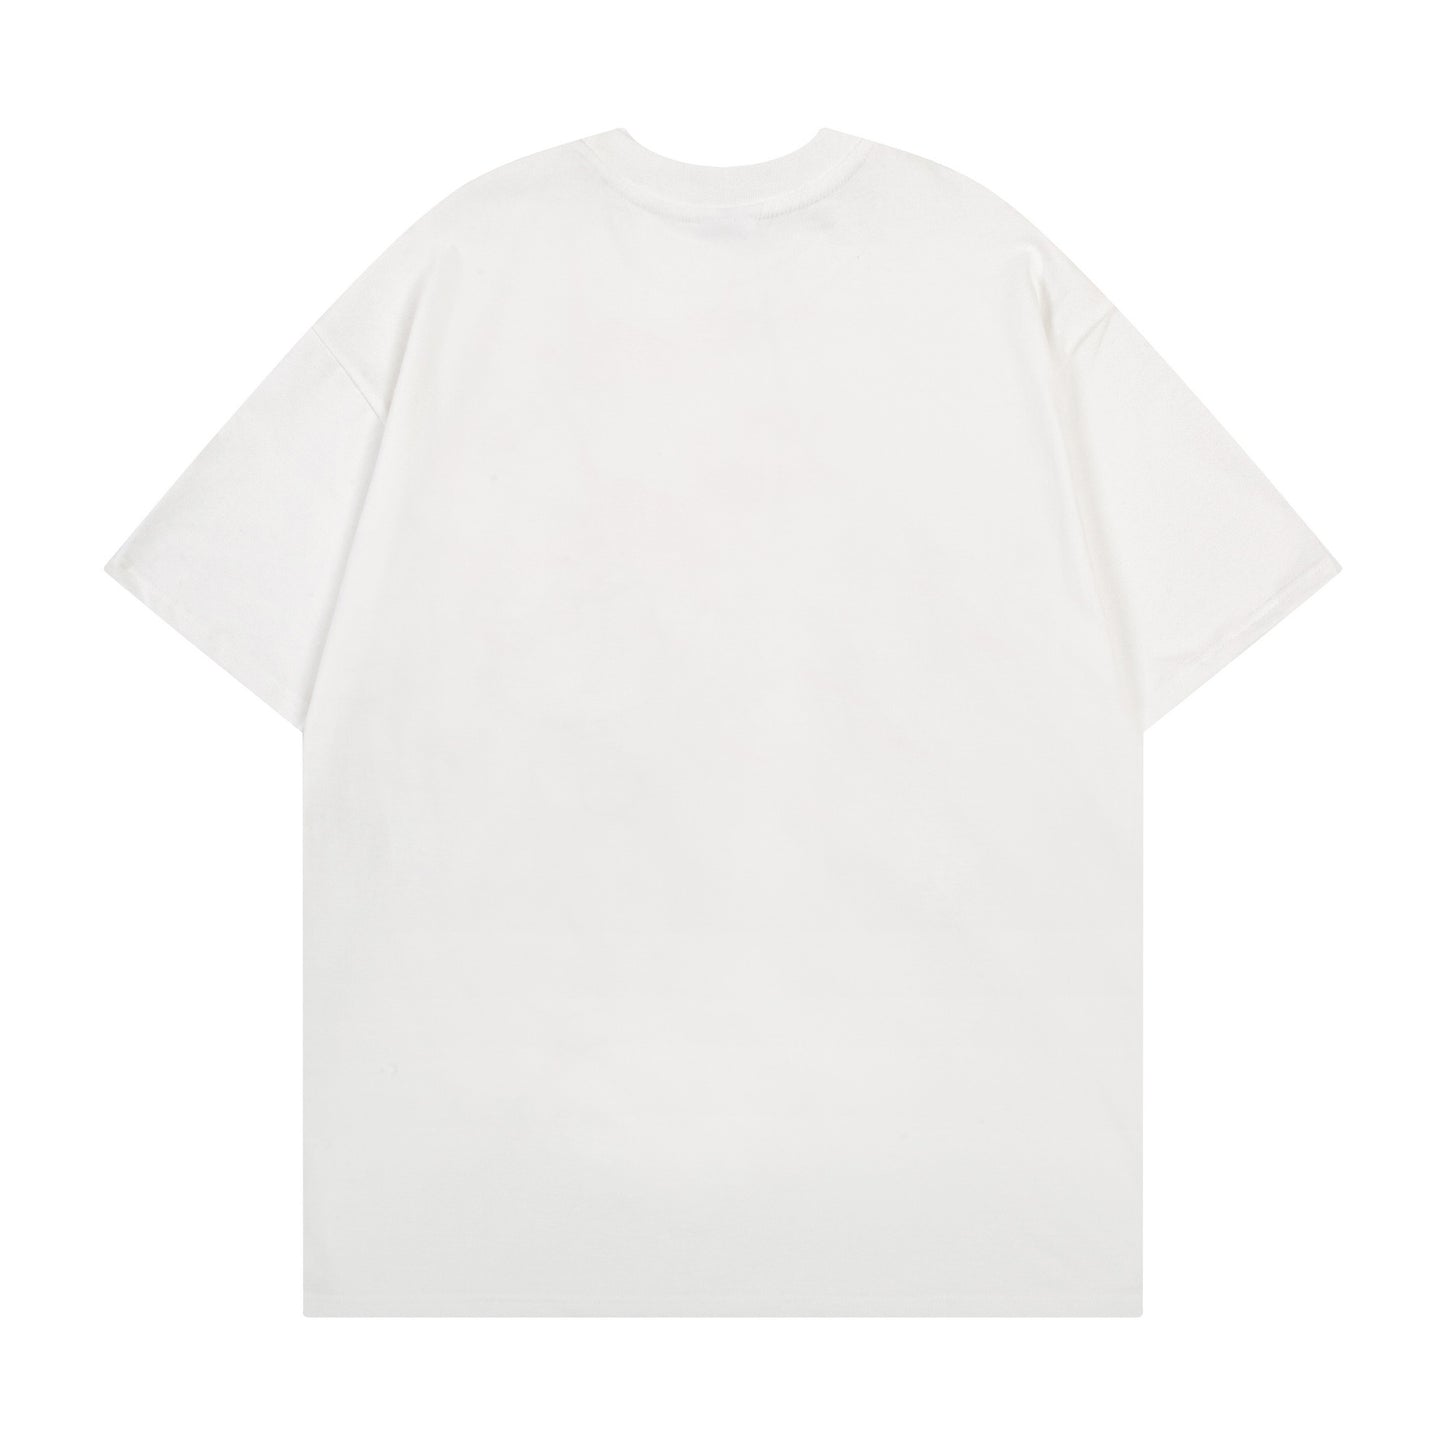 Hellokitty x Spiderman Short Sleeve Tee Casual Summer T Shirt Top